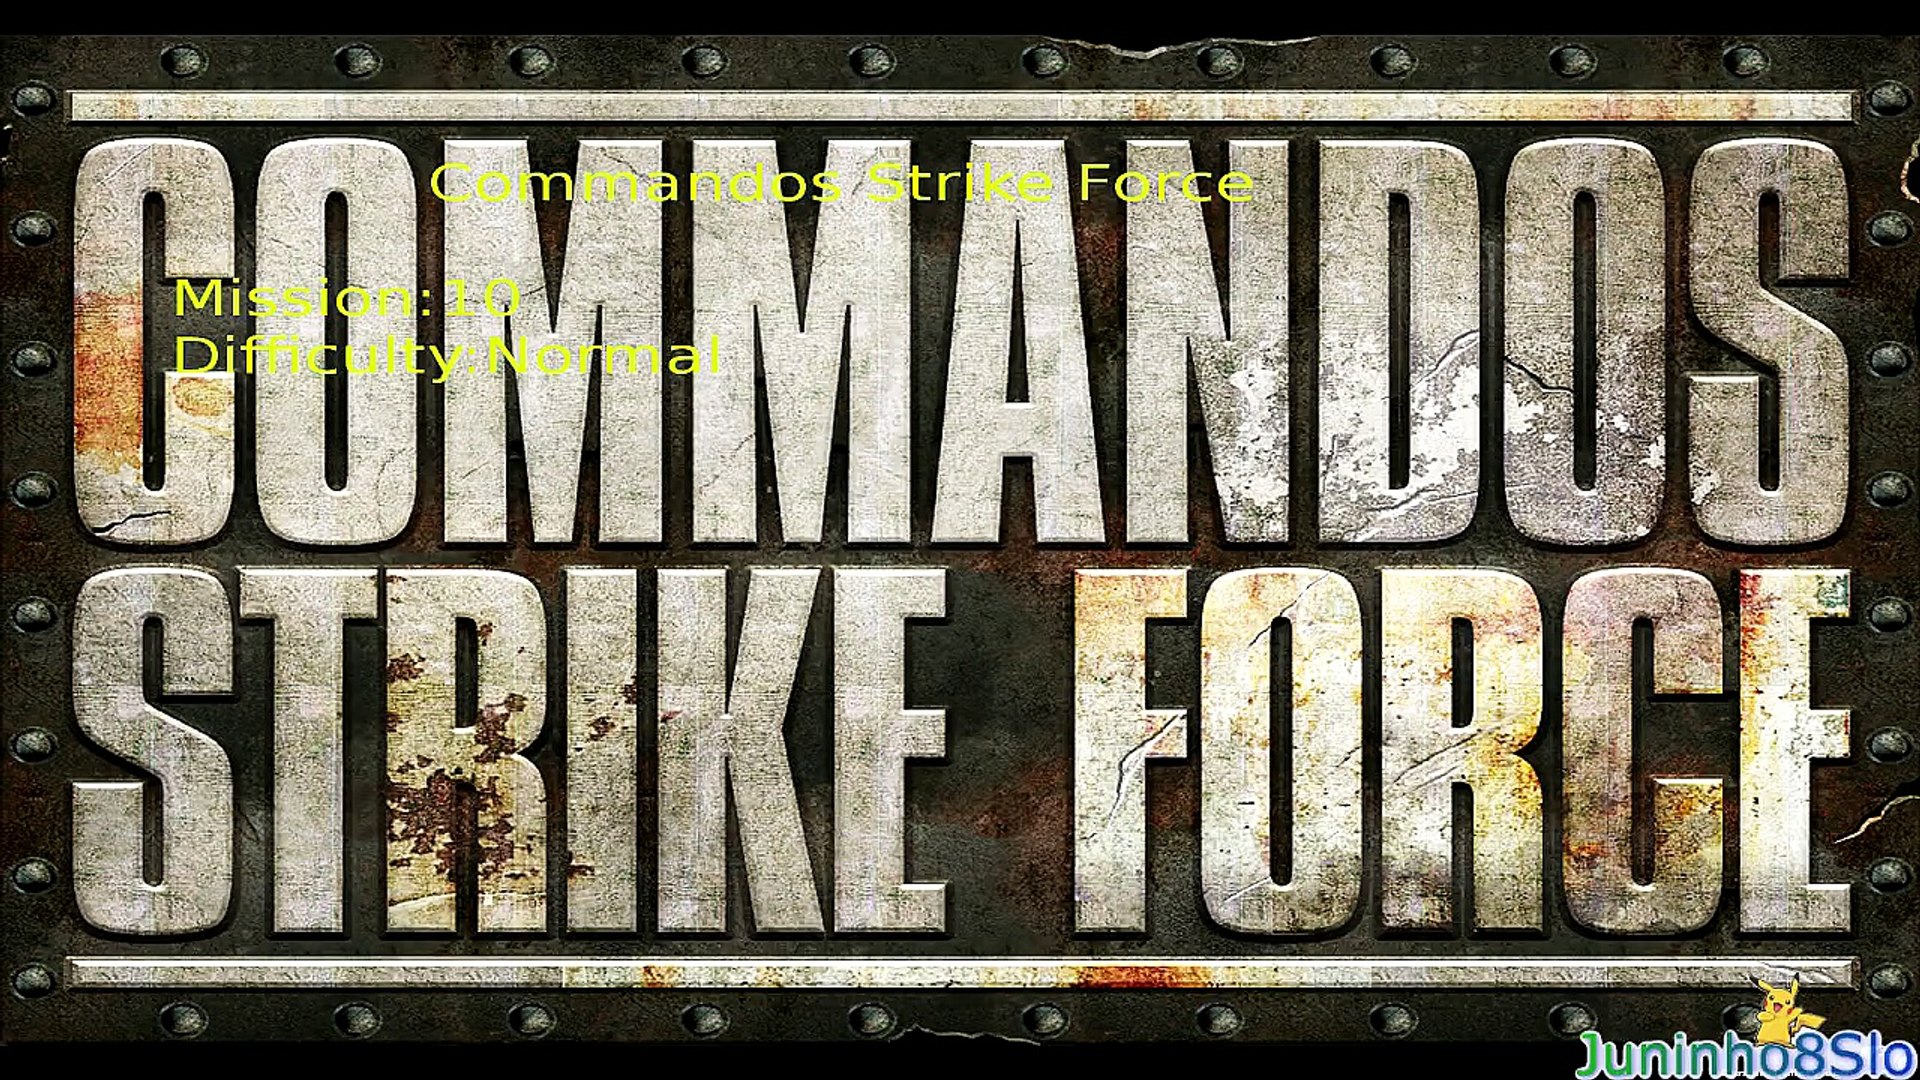 download Commandos: Strike Force